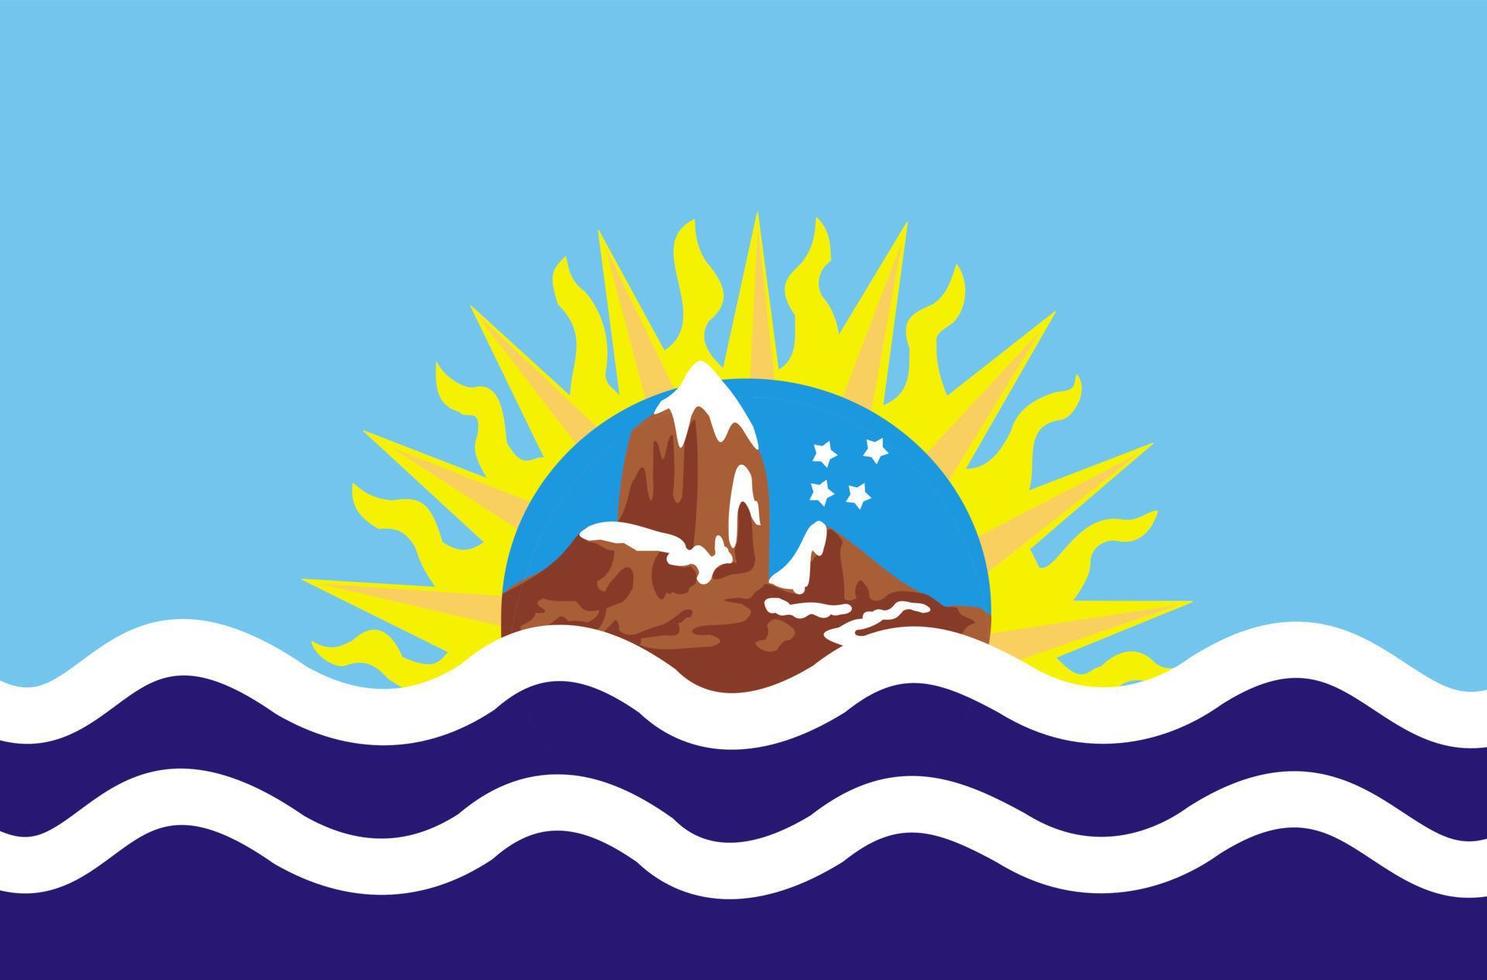 Santa Cruz Flag. Argentina Provinces. Vector Illustration.